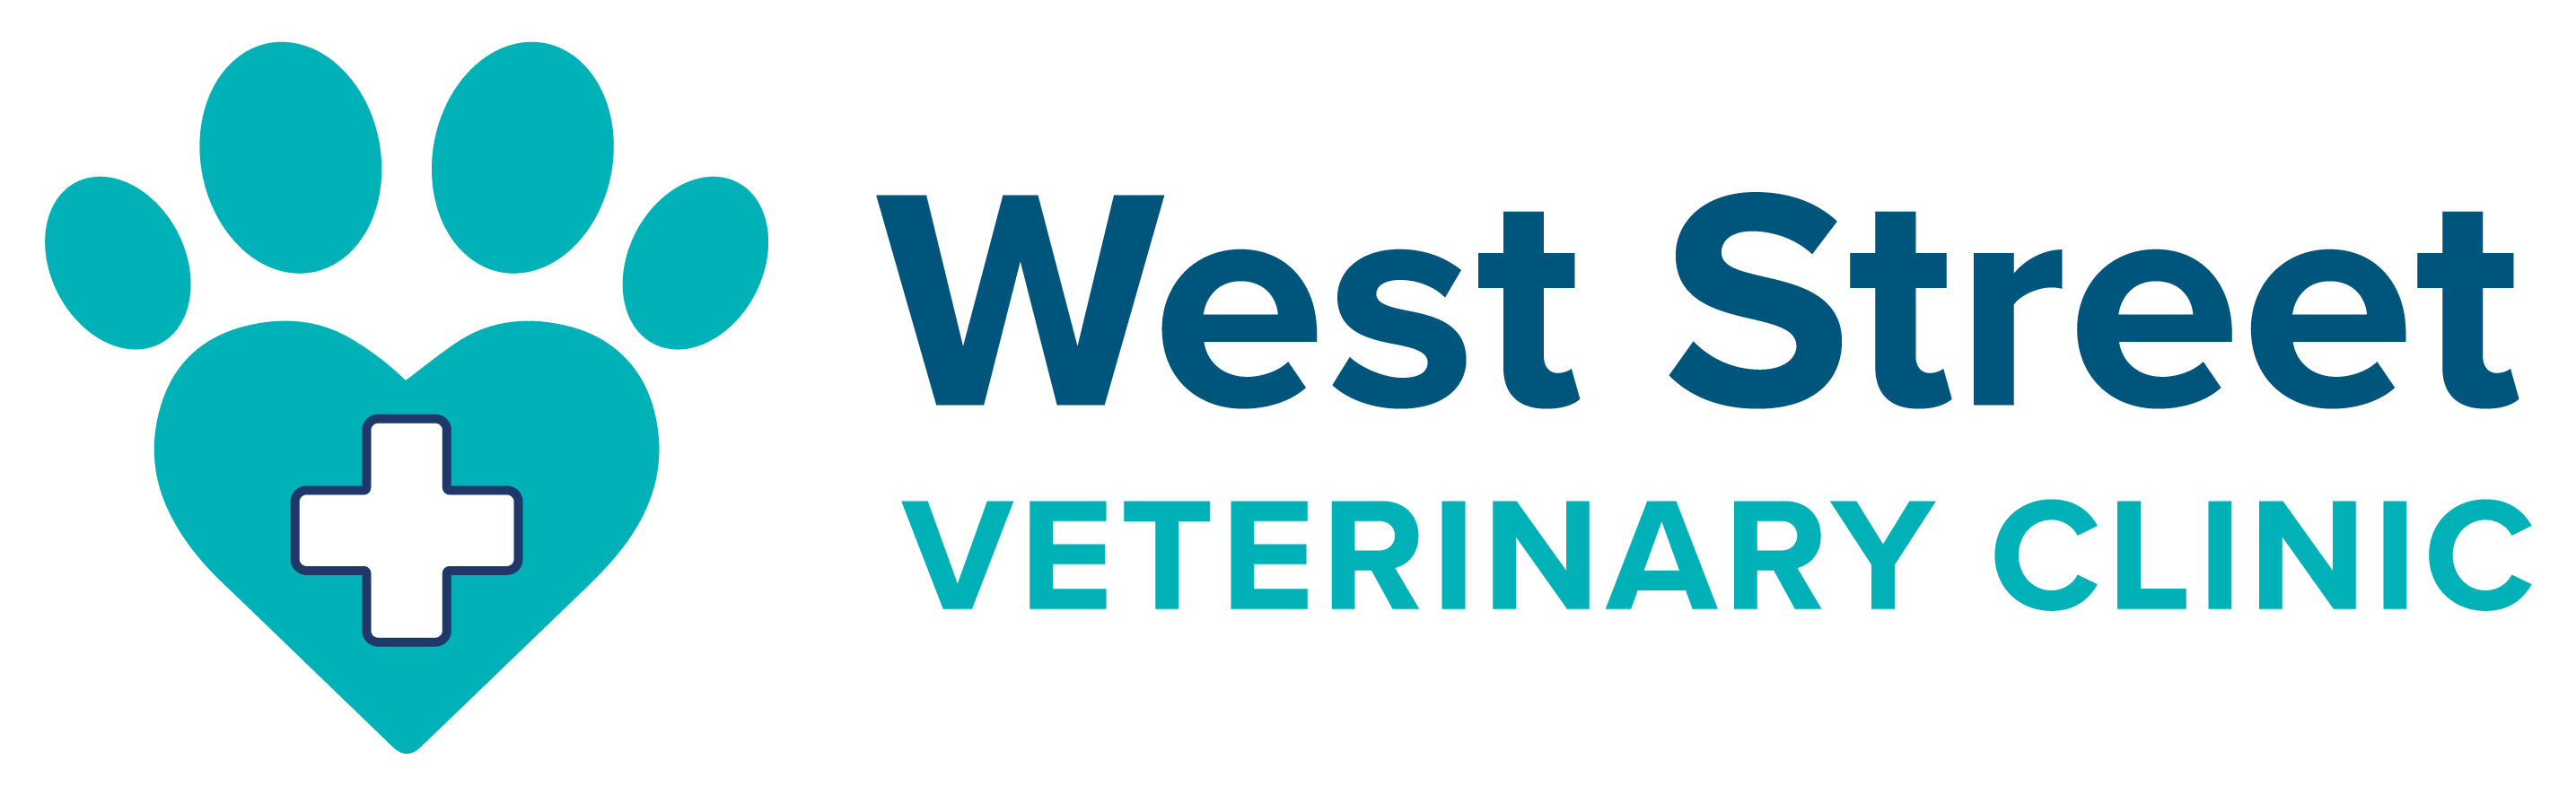 West Street Veterinary Clinic